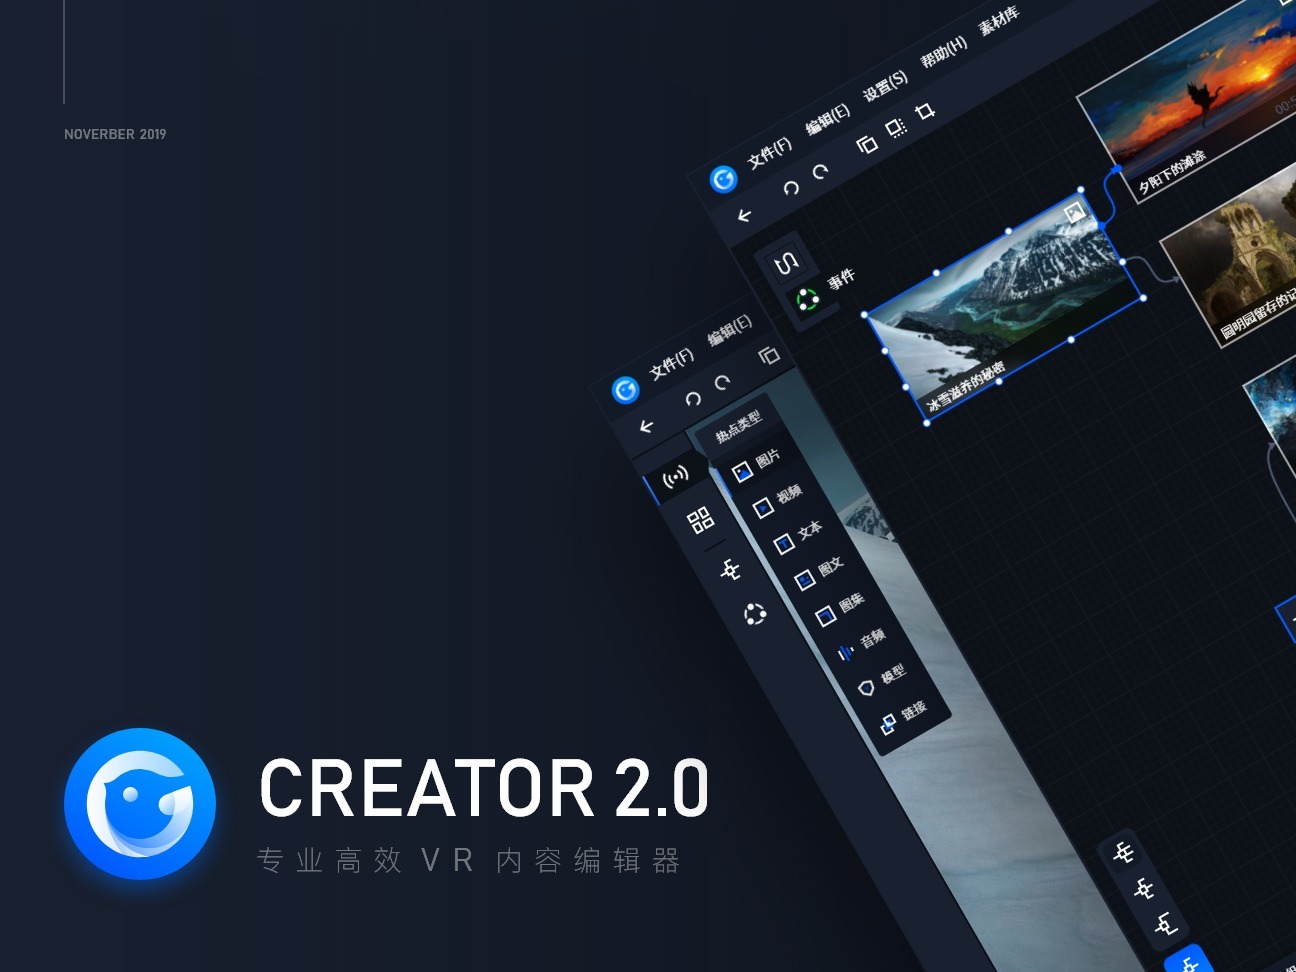 CREATOR 2.0